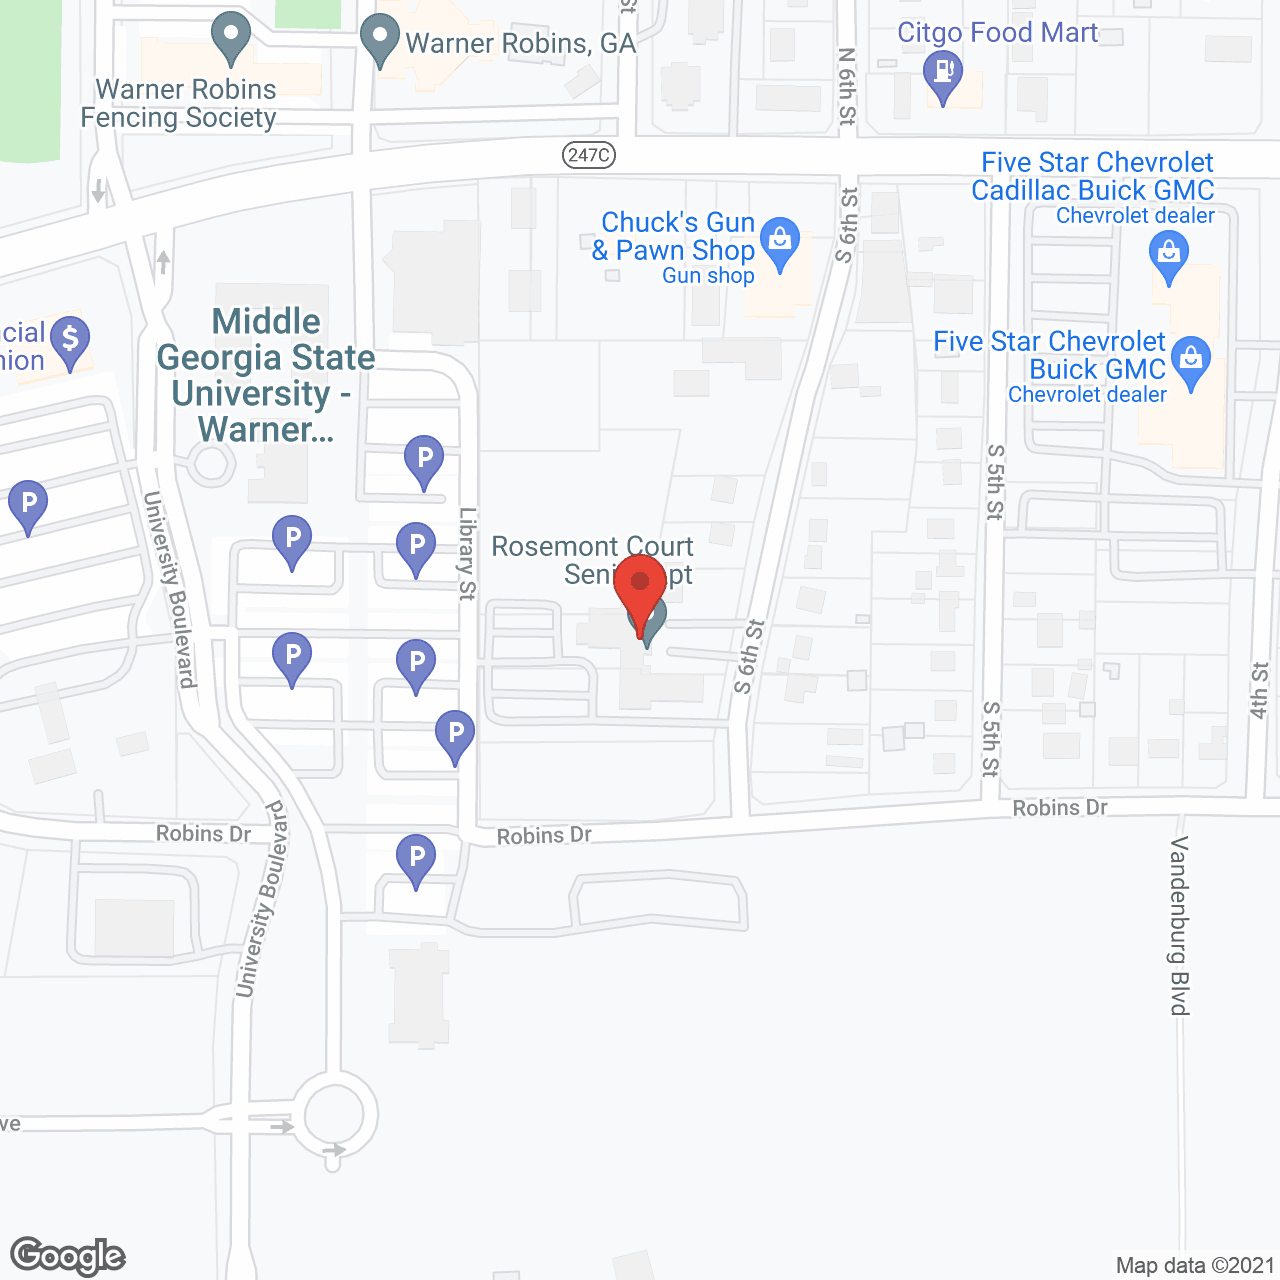 Rosemont Court in google map